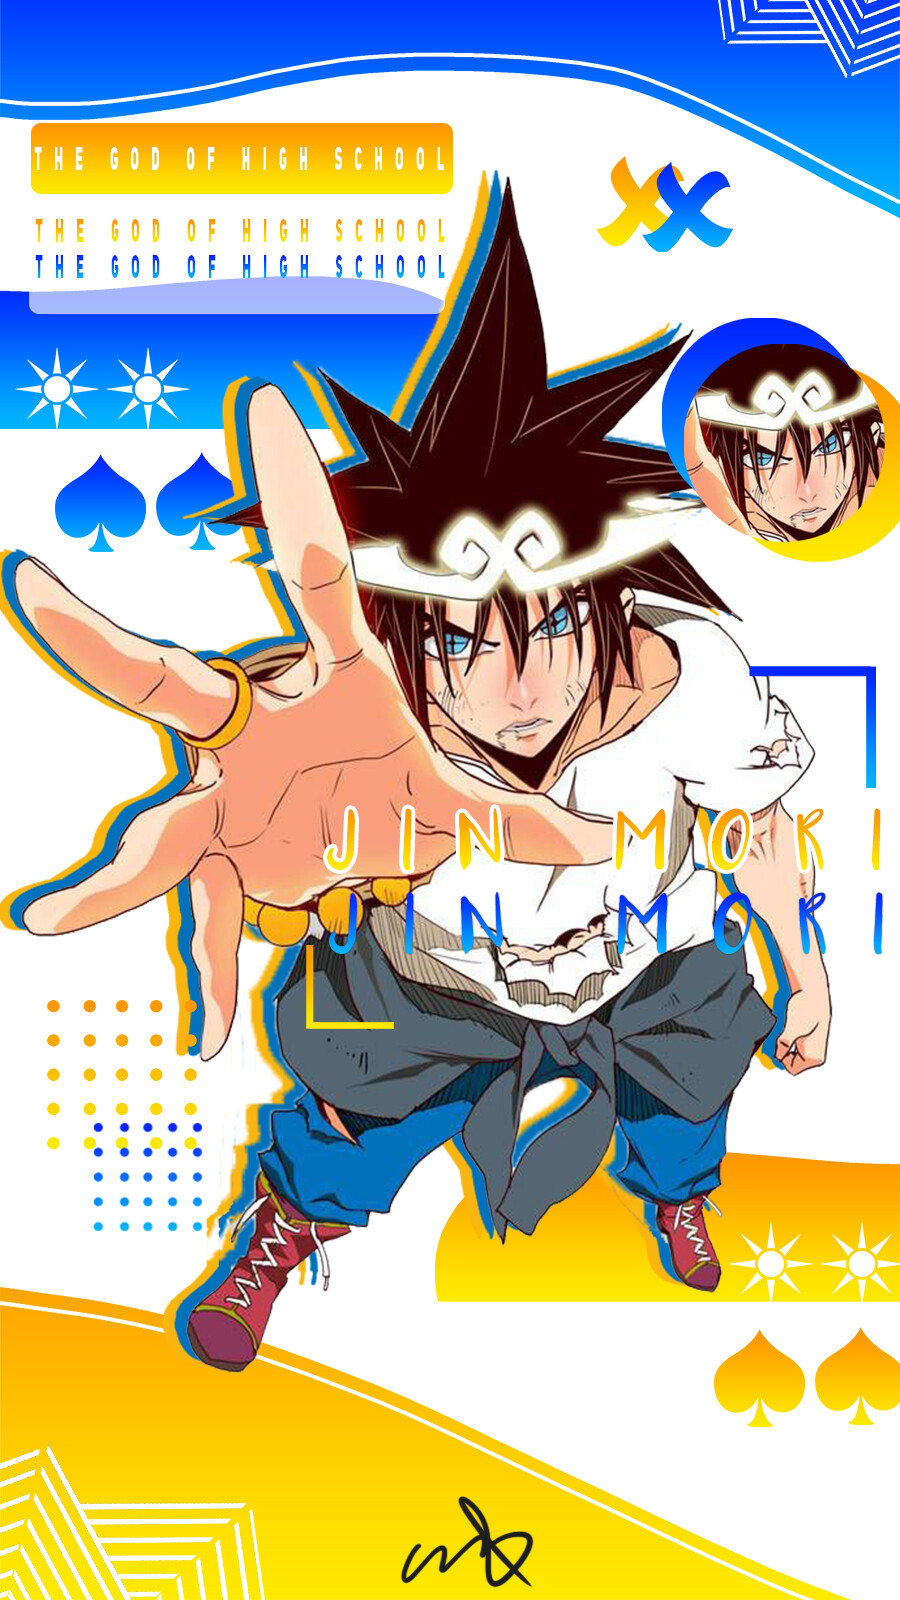 Wallpaper ID 383466  Anime The God of High School Phone Wallpaper Jin  Mori 1080x1920 free download